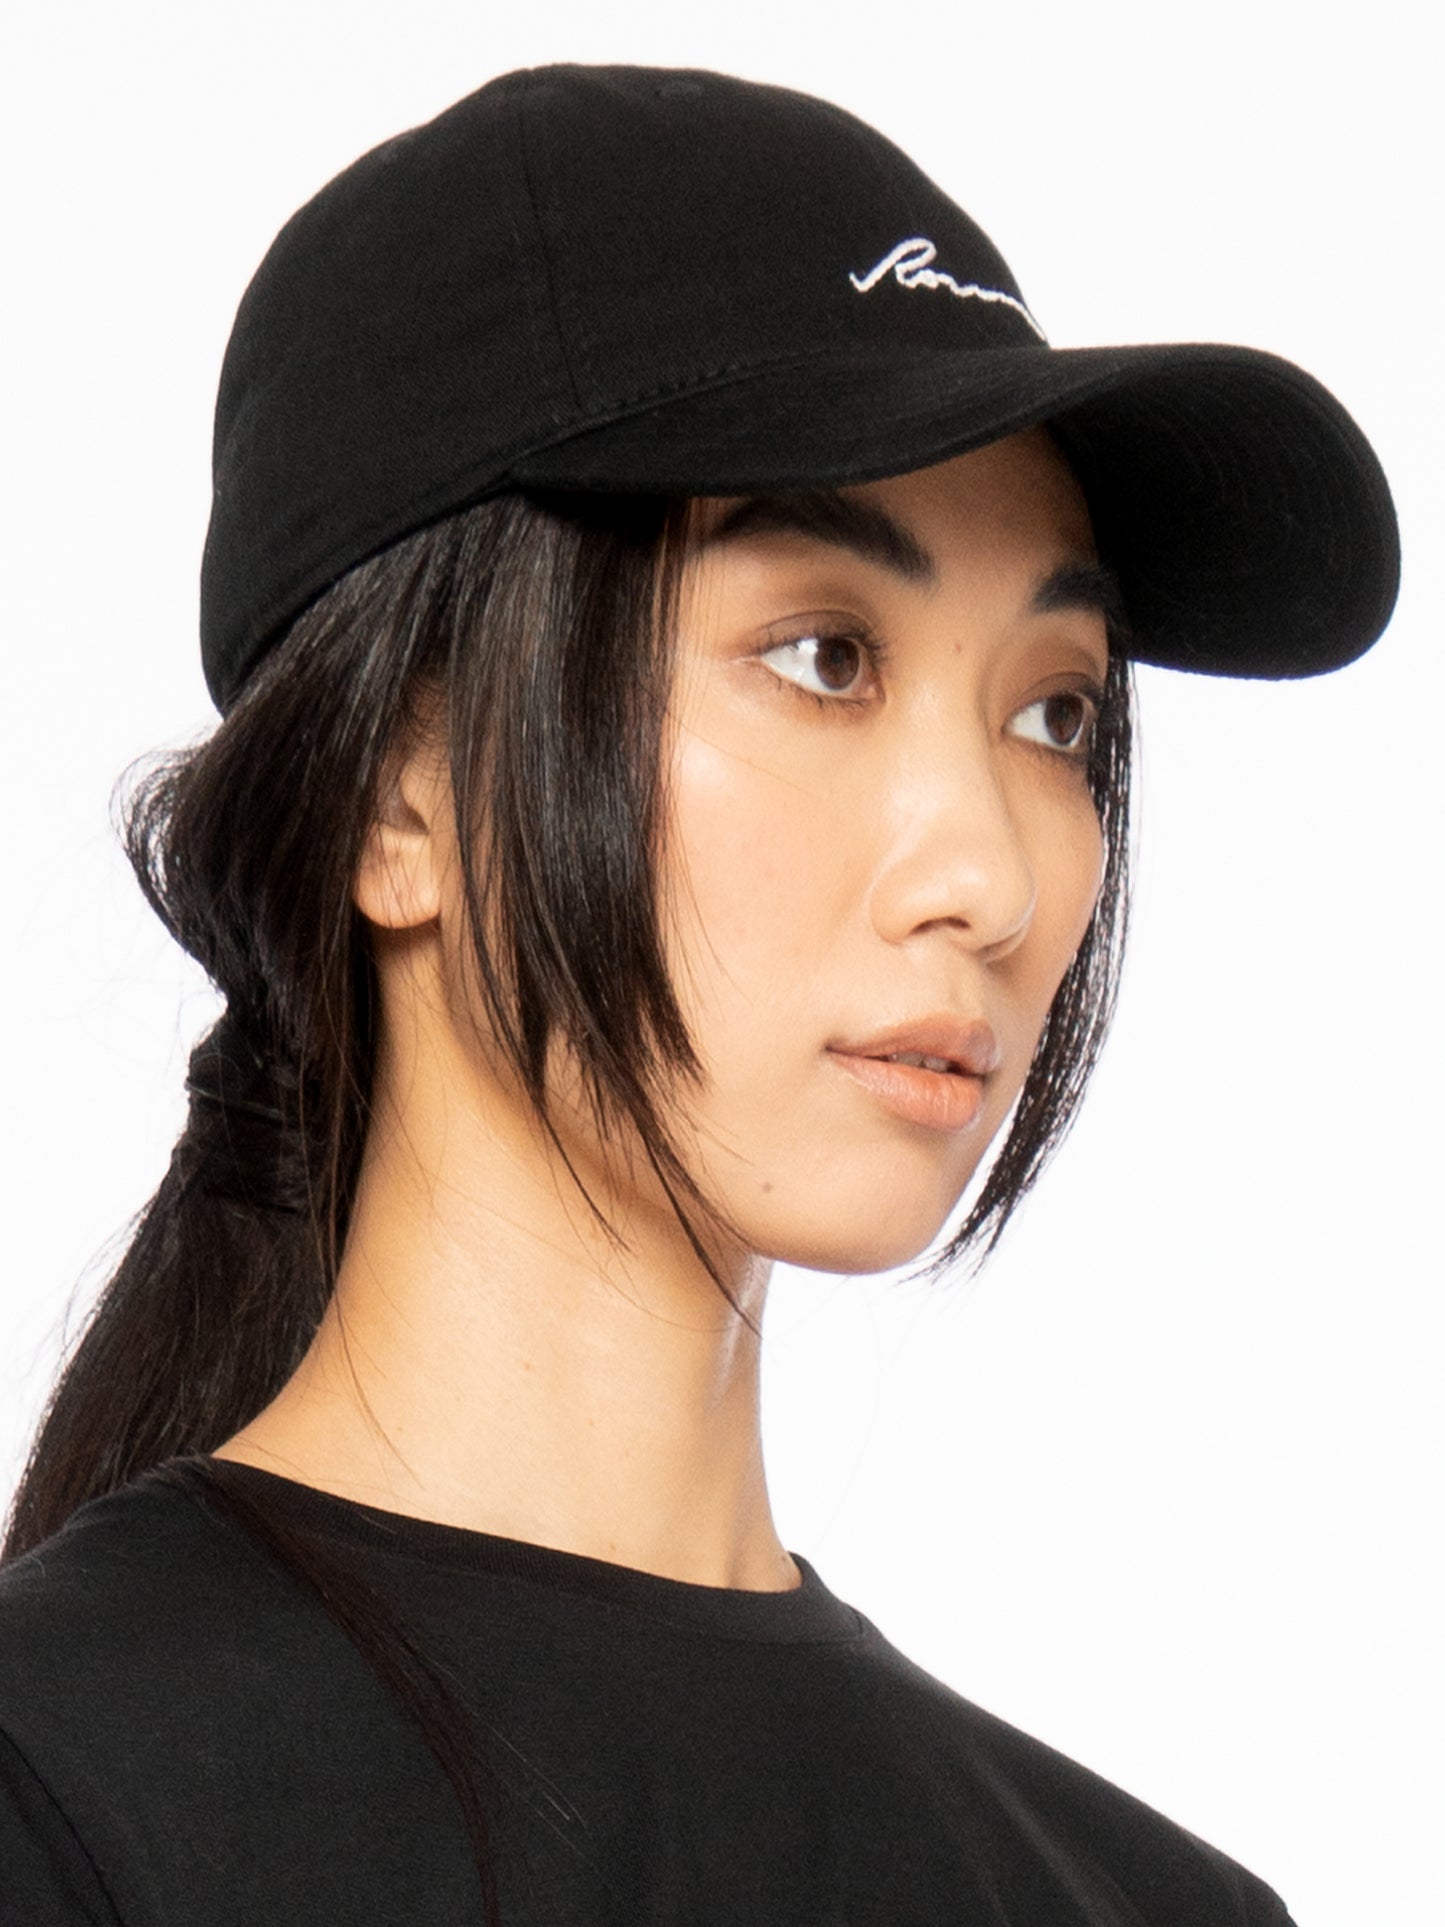 rosin studios black logo embroidered dad hat baseball cap